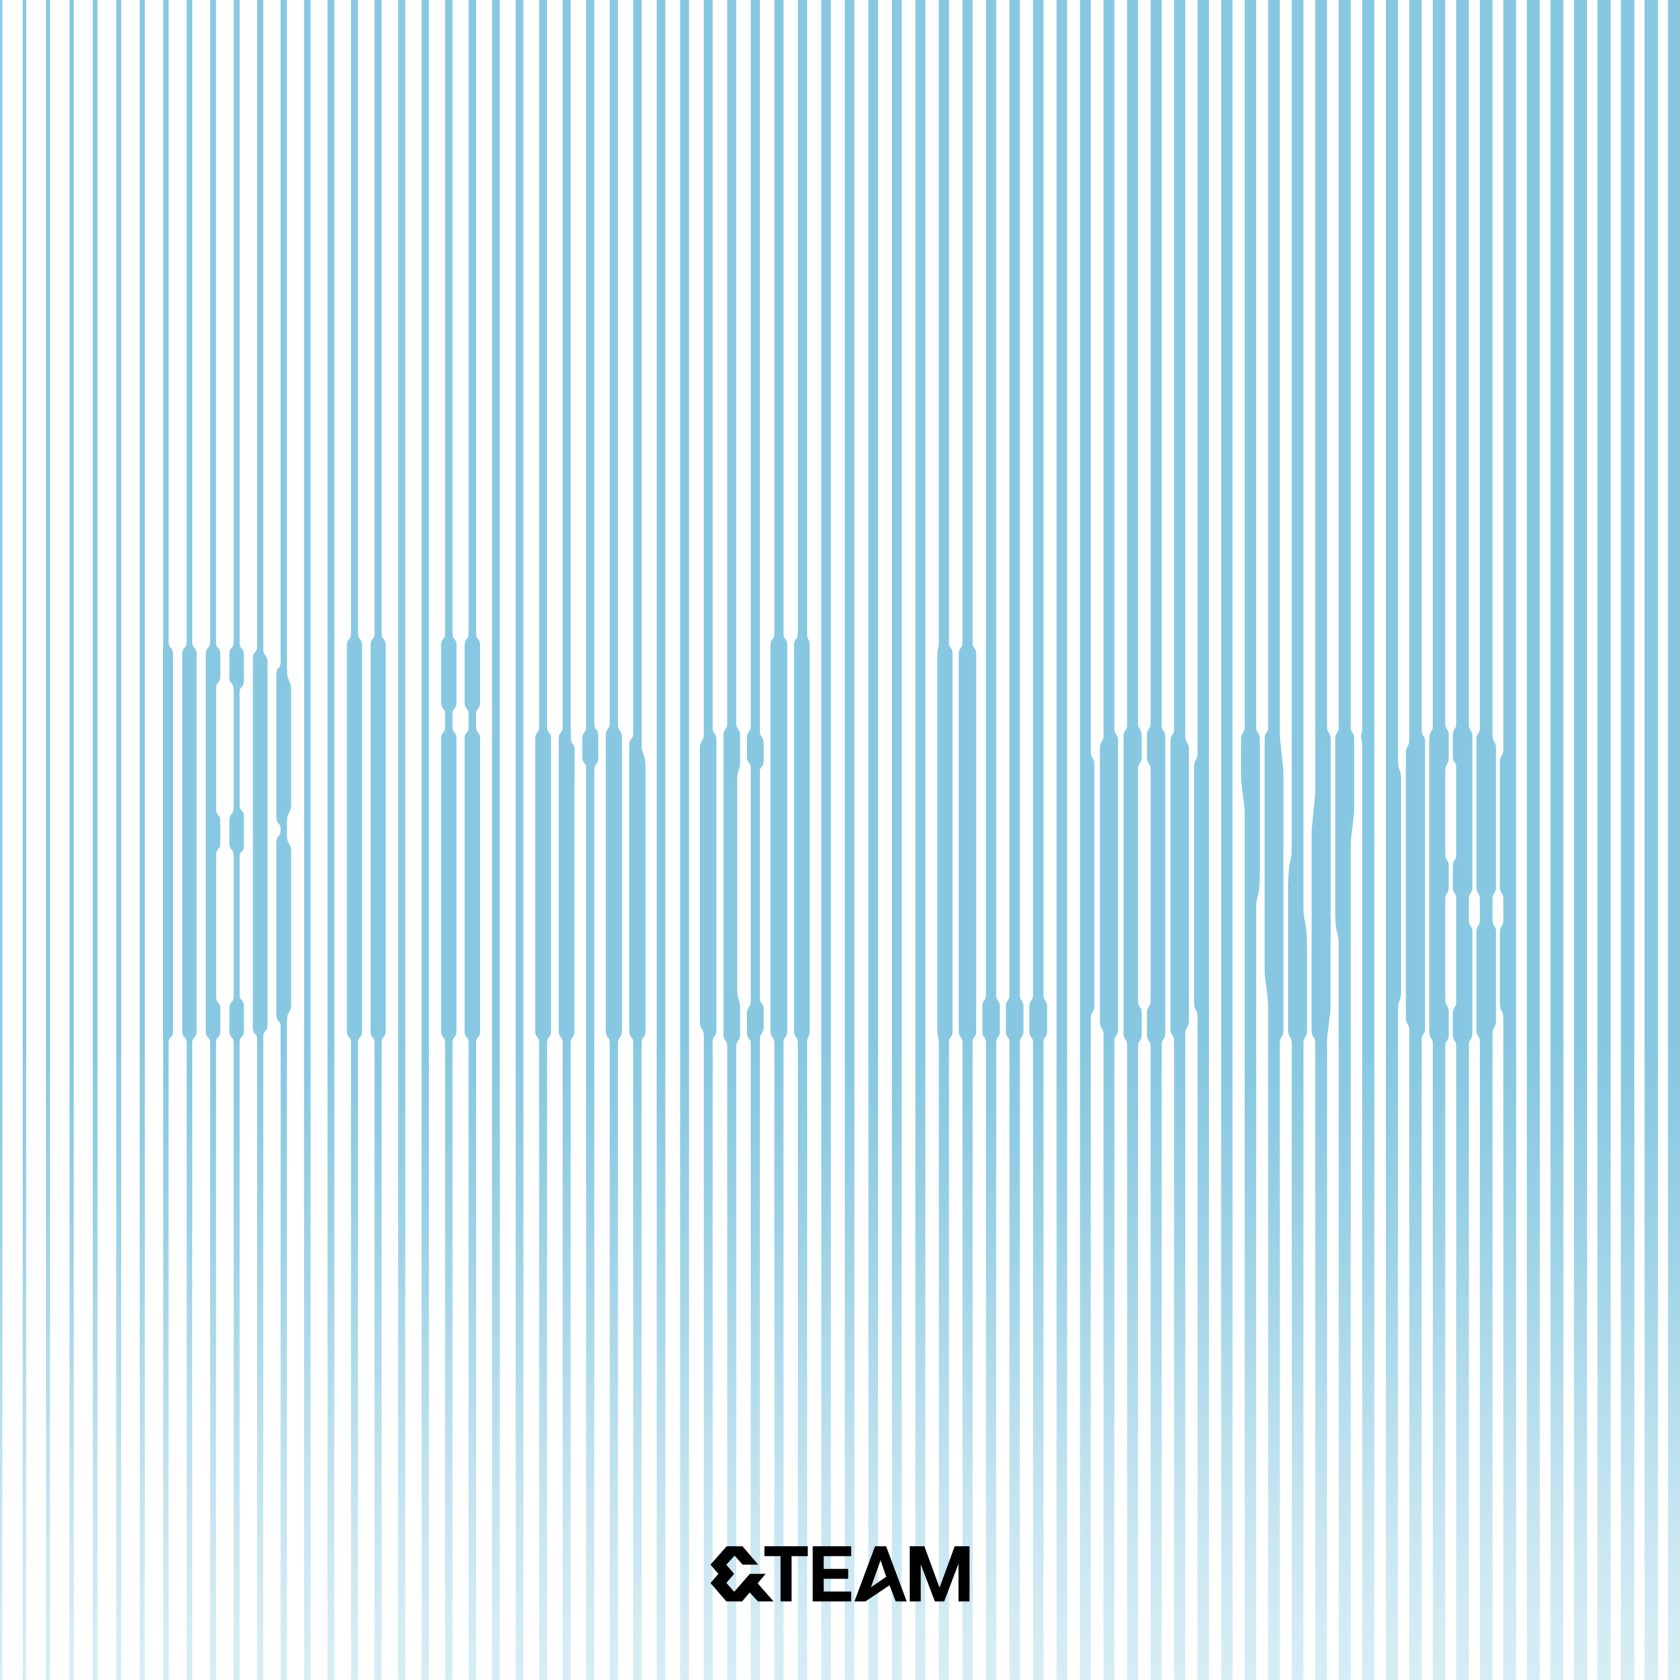 &TEAM最新曲「Blind Love」ジャケット写真 